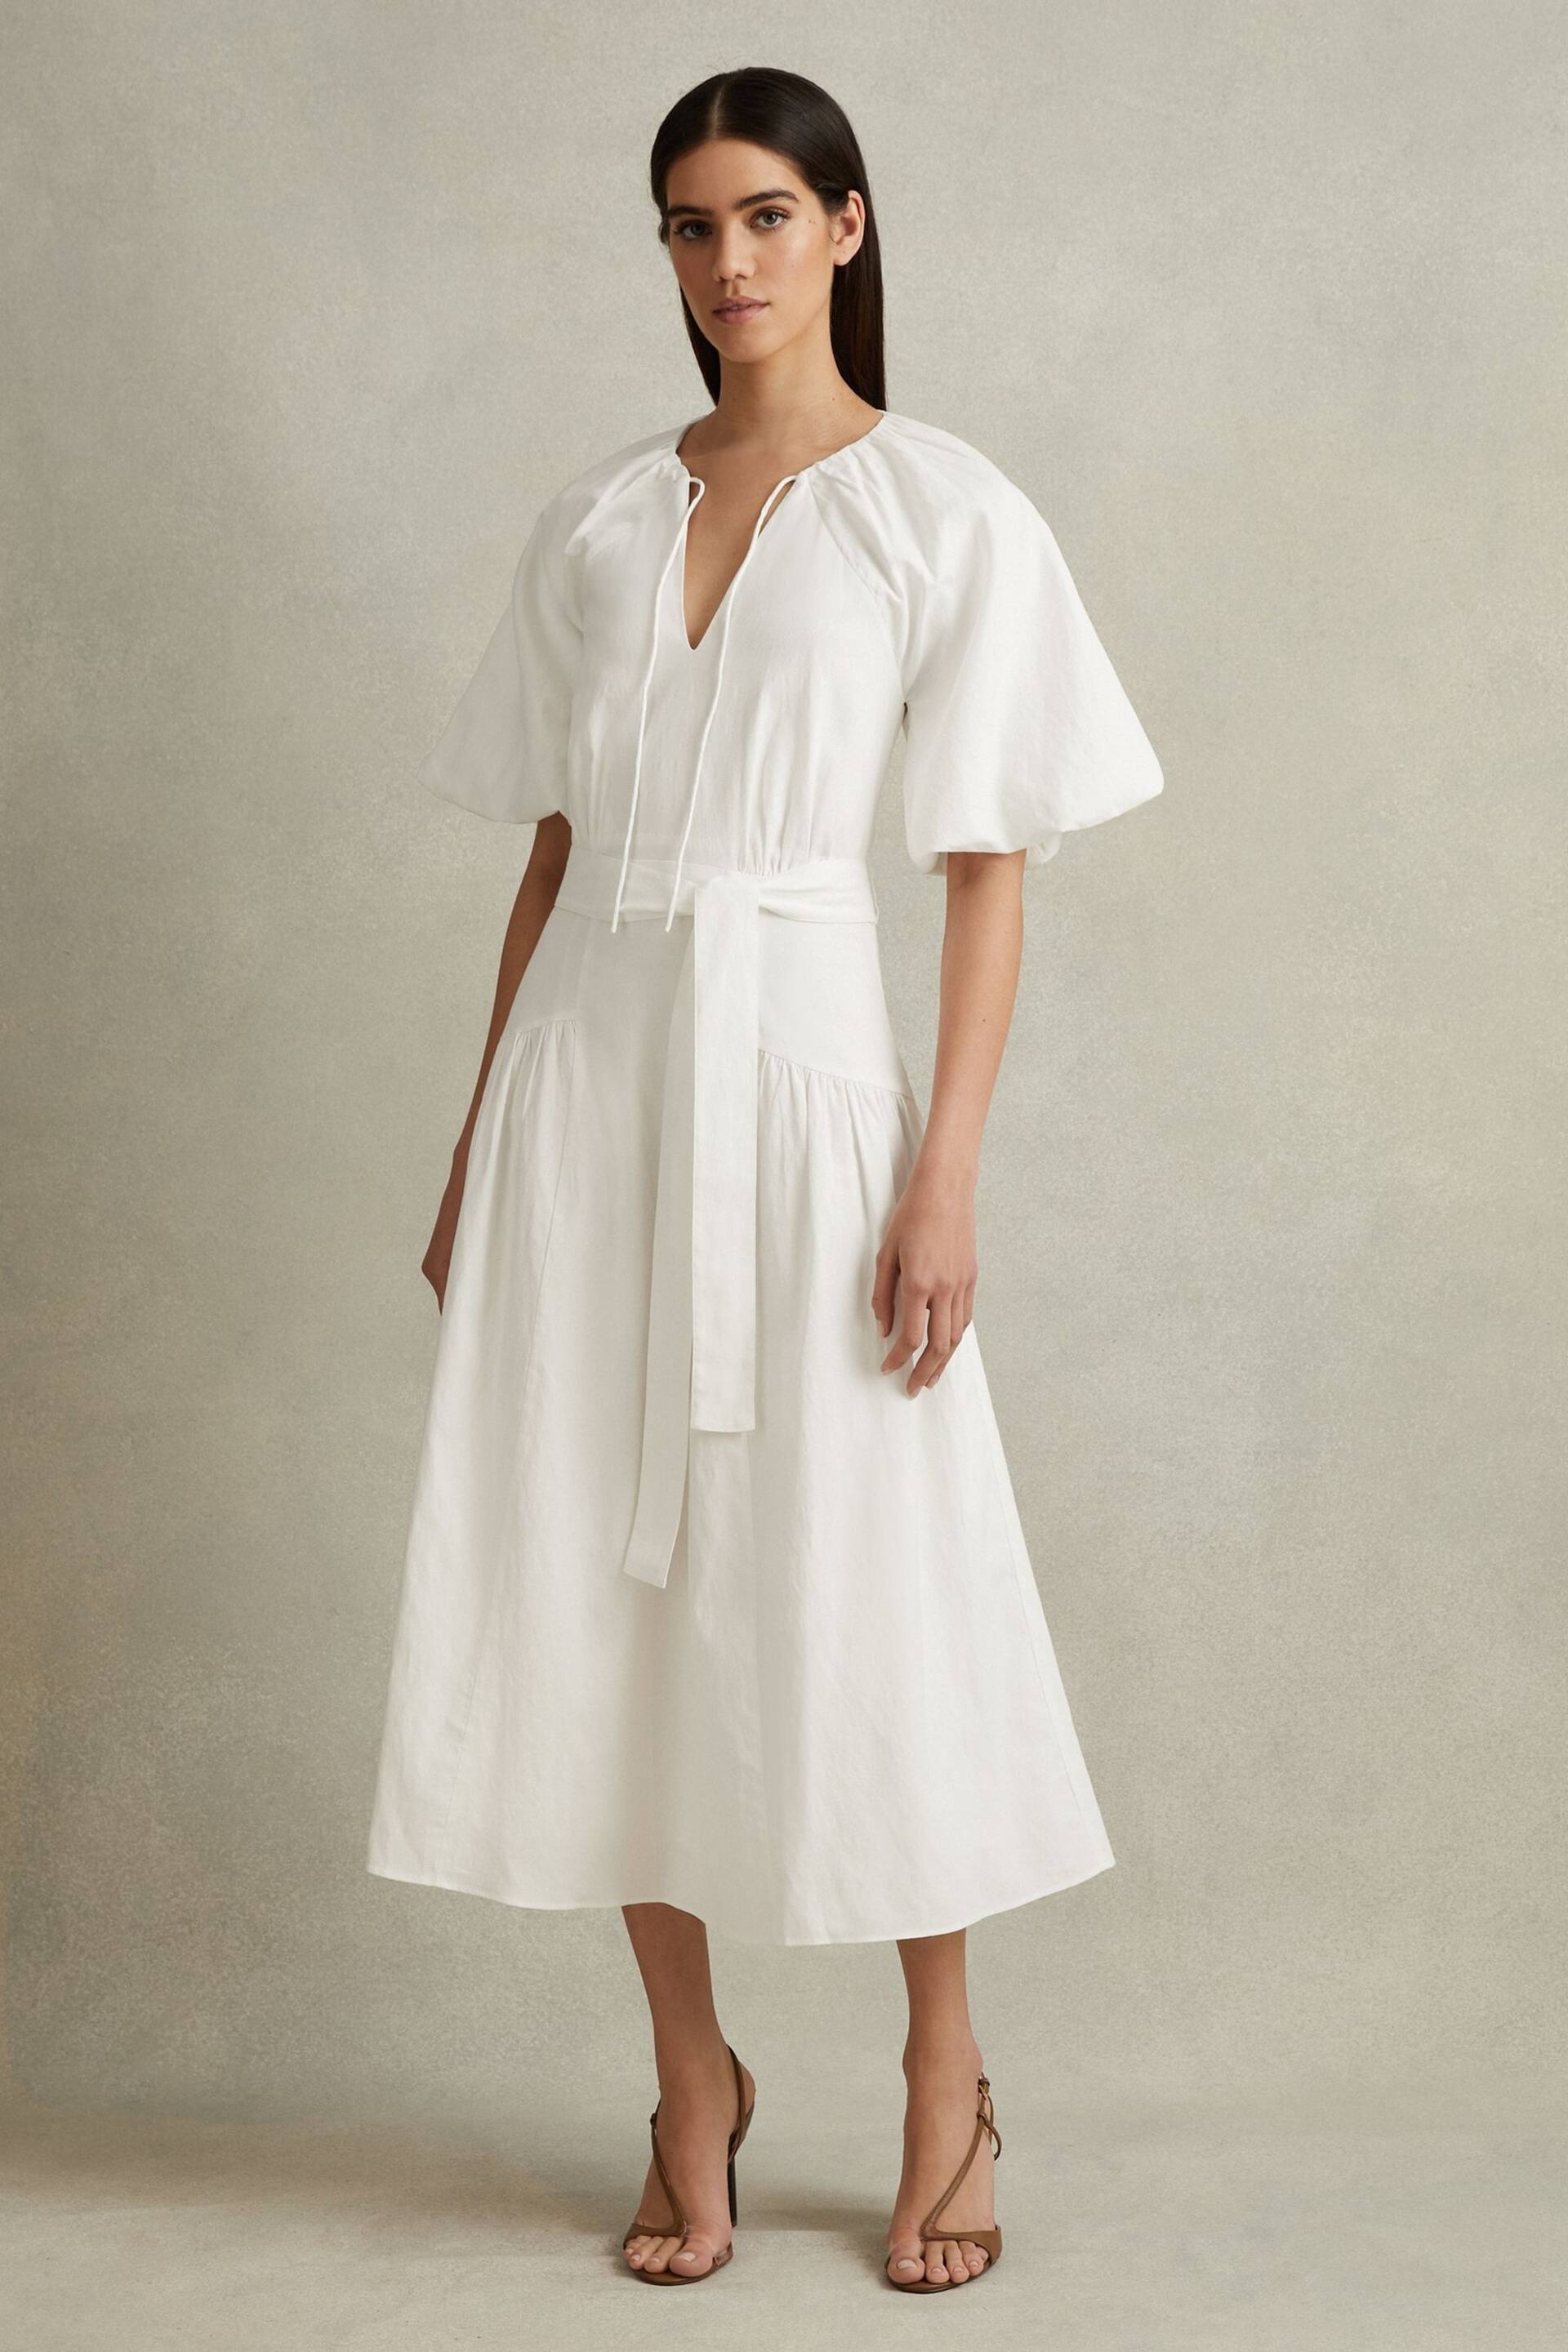 Reiss White Alice Petite Lyocell Blend Puff Sleeve Midi Dress - Image 1 of 6